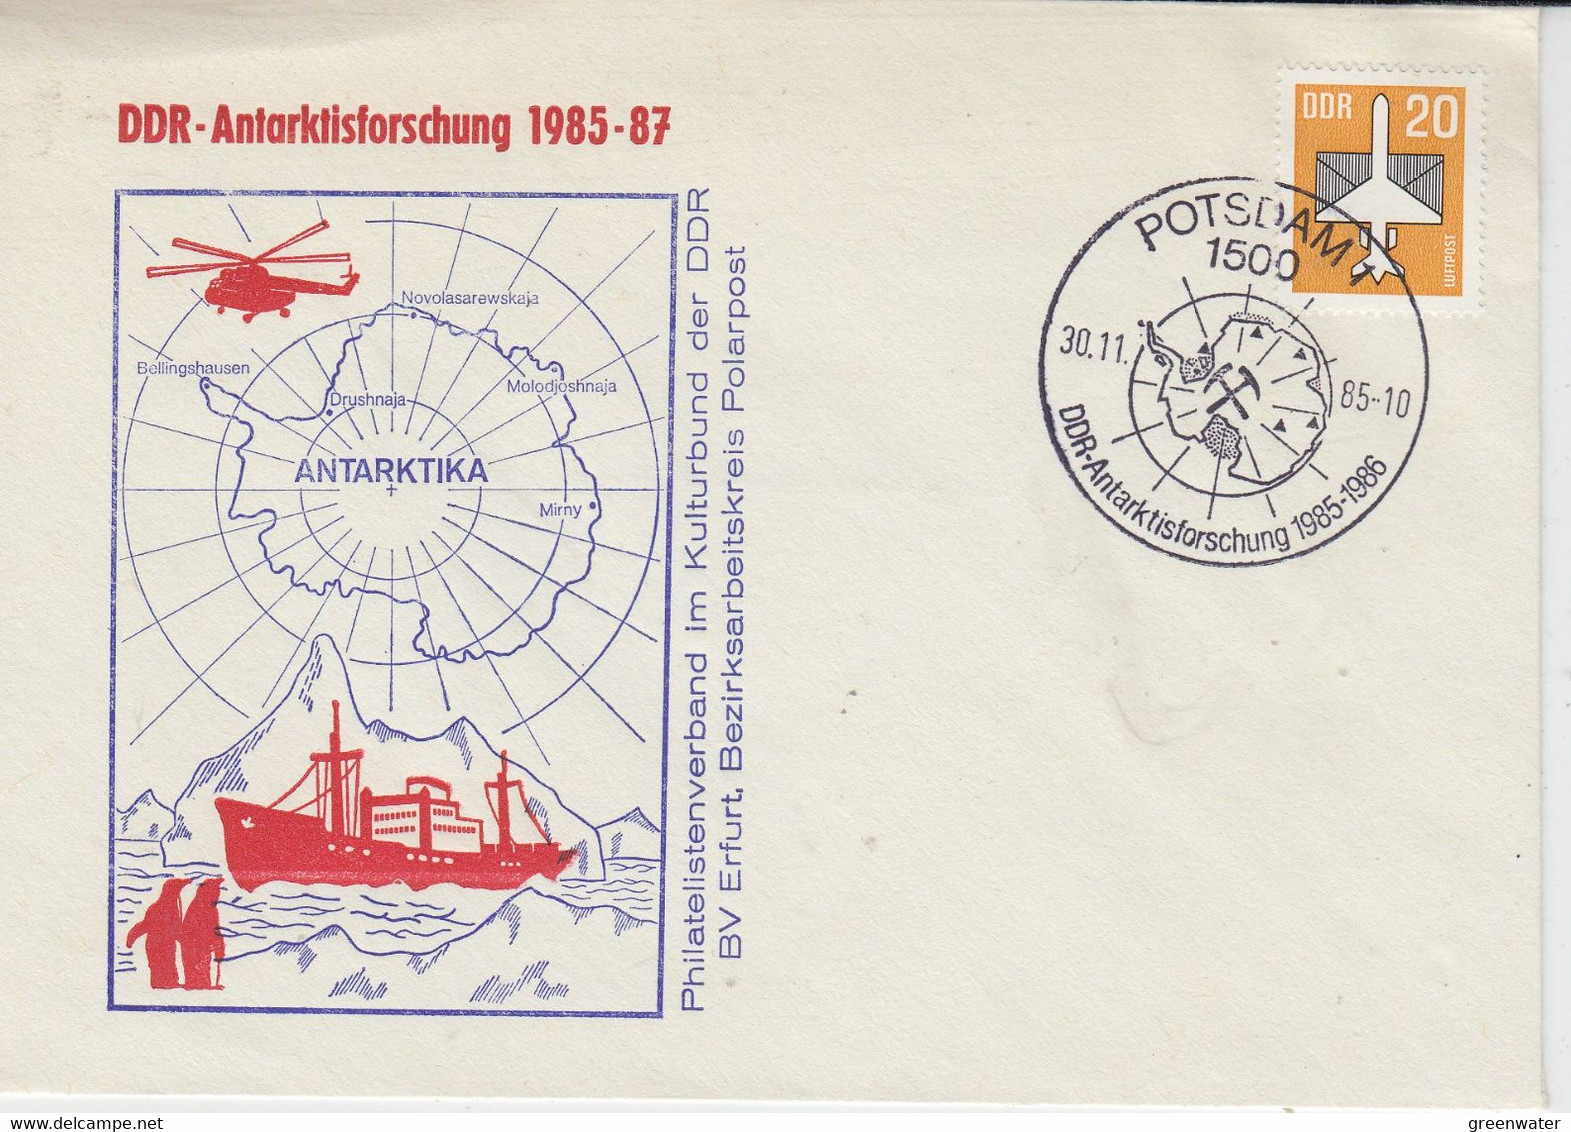 DDR 1985 Antarktisforschung DDRCa Potsdam 30-11-1985 (58020) - Programmes Scientifiques